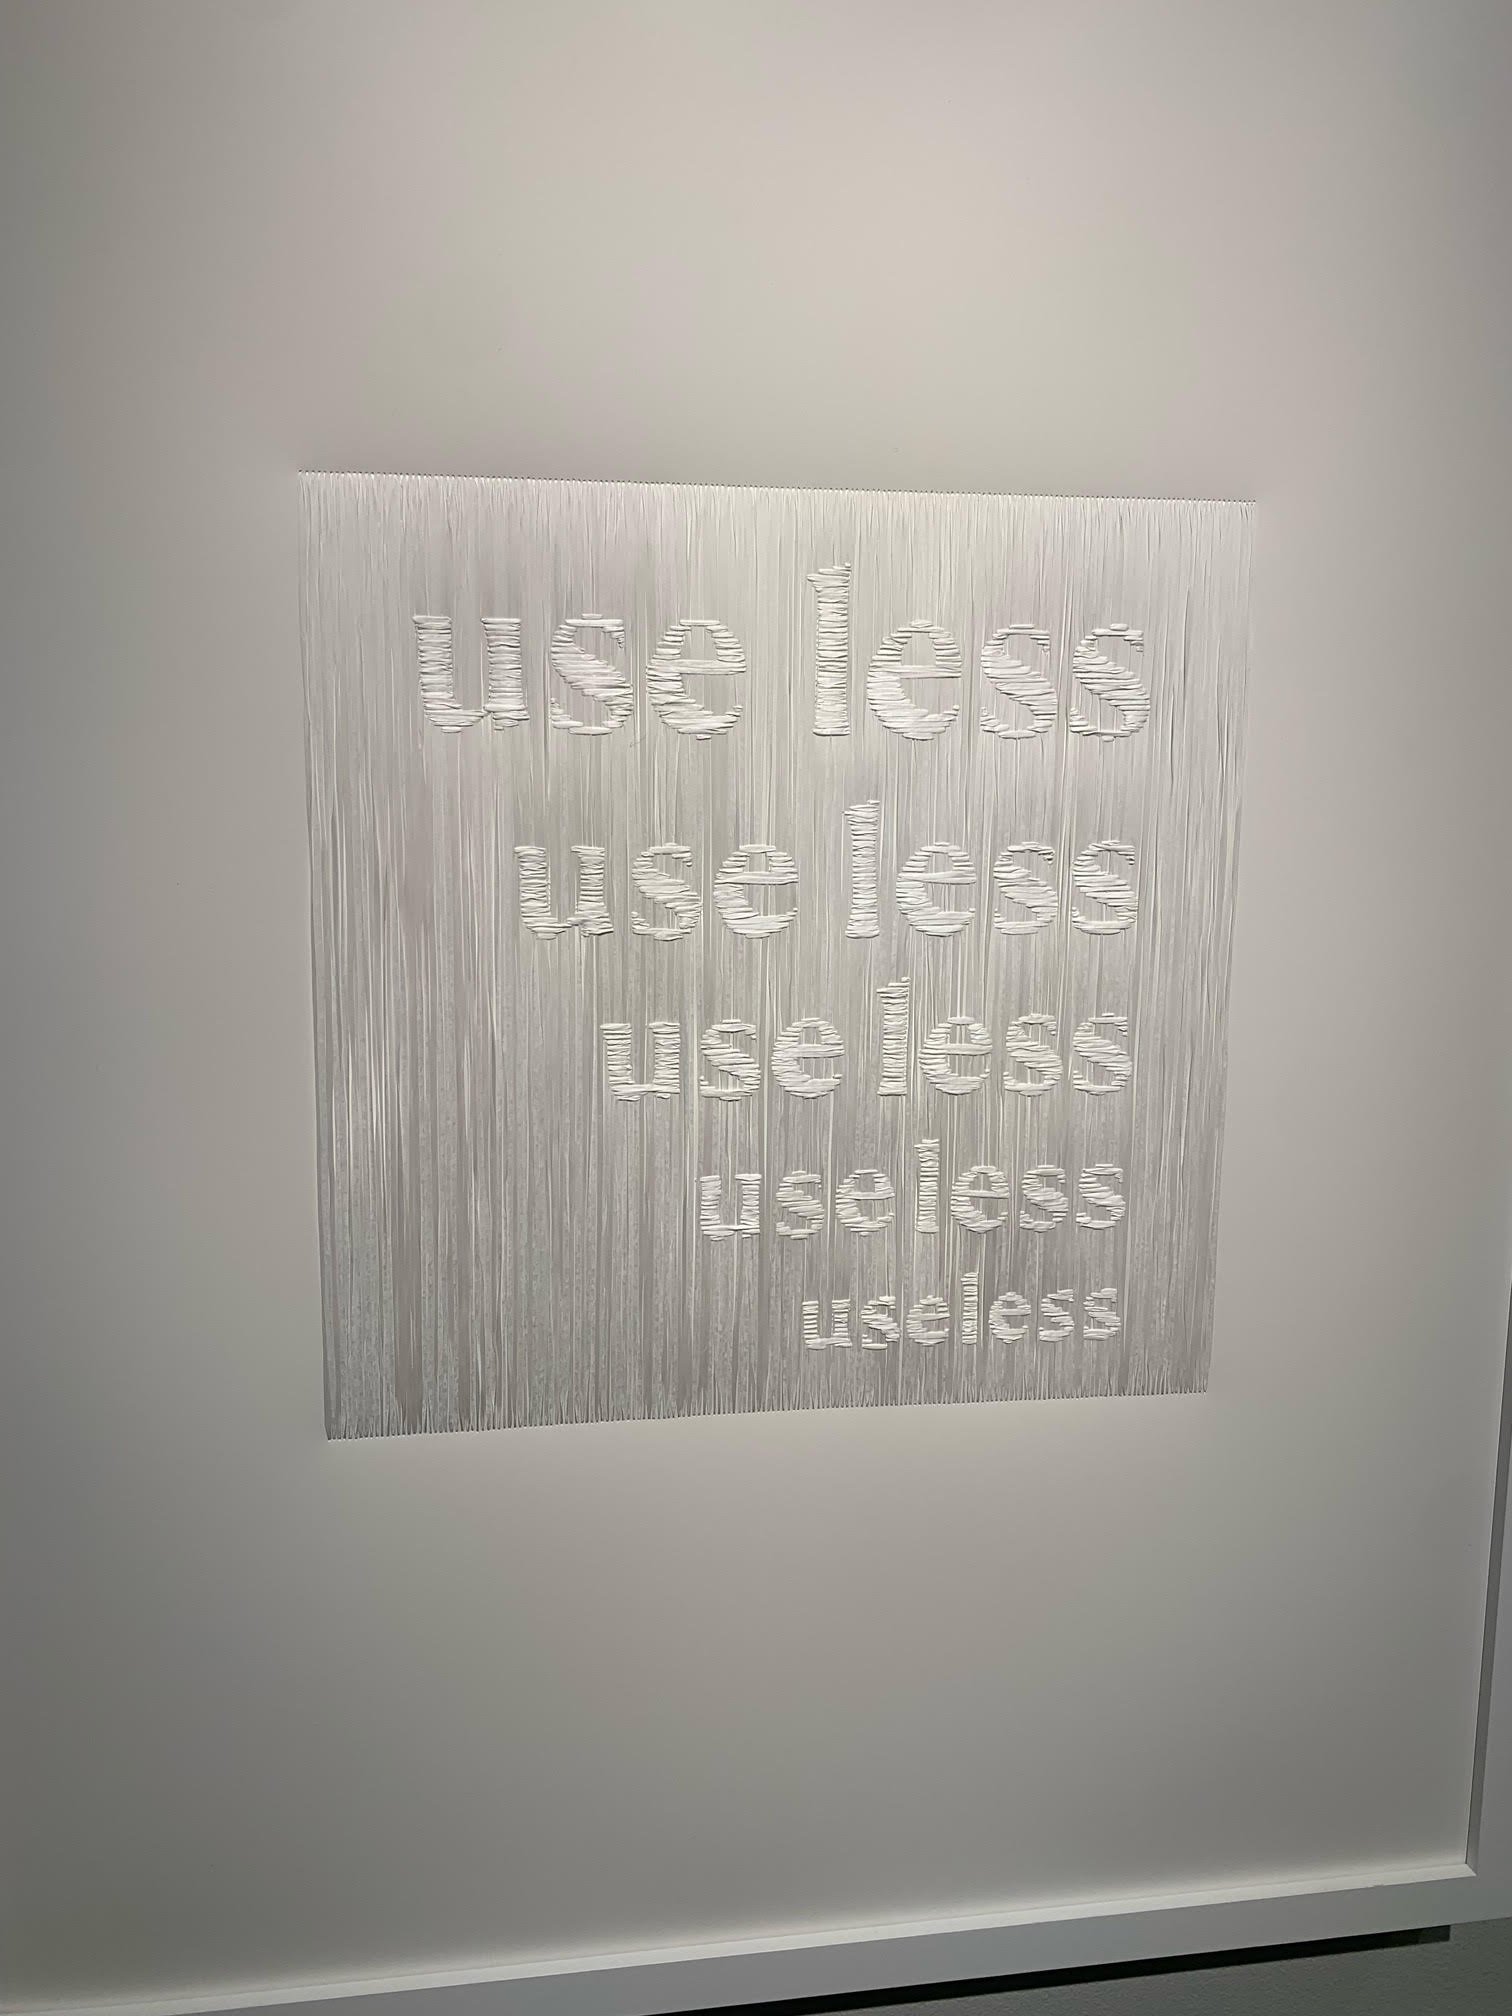 Use Less/Useless, 2021